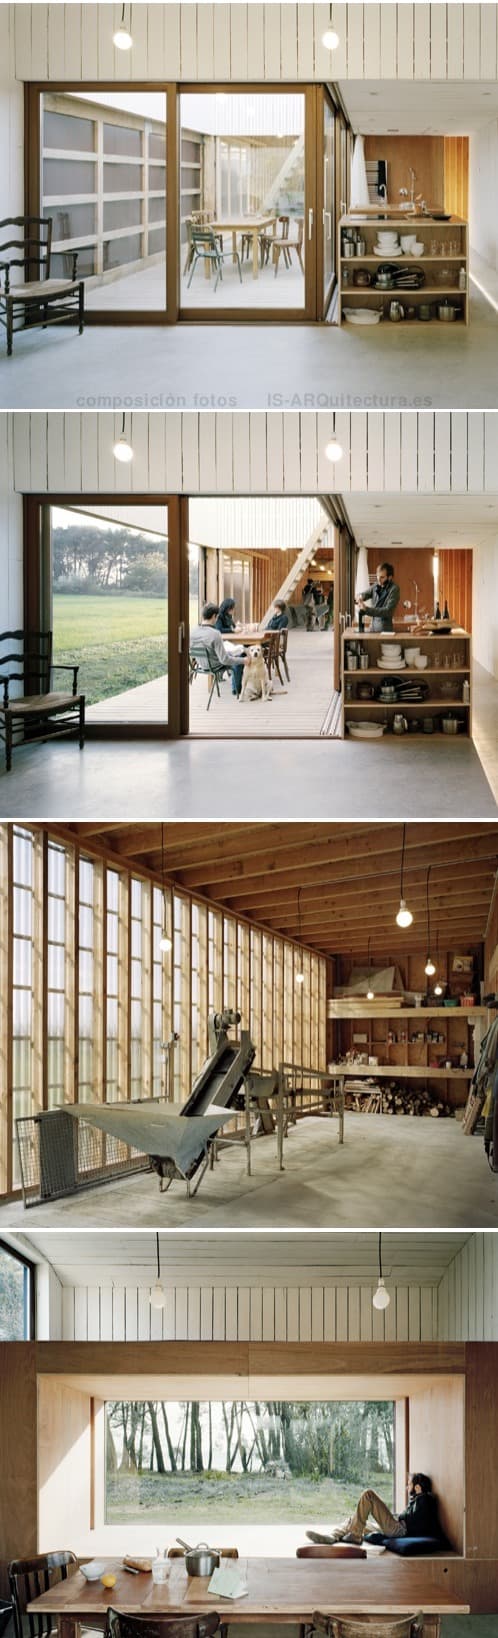 granja_oyster-casa-madera-fotos interiores